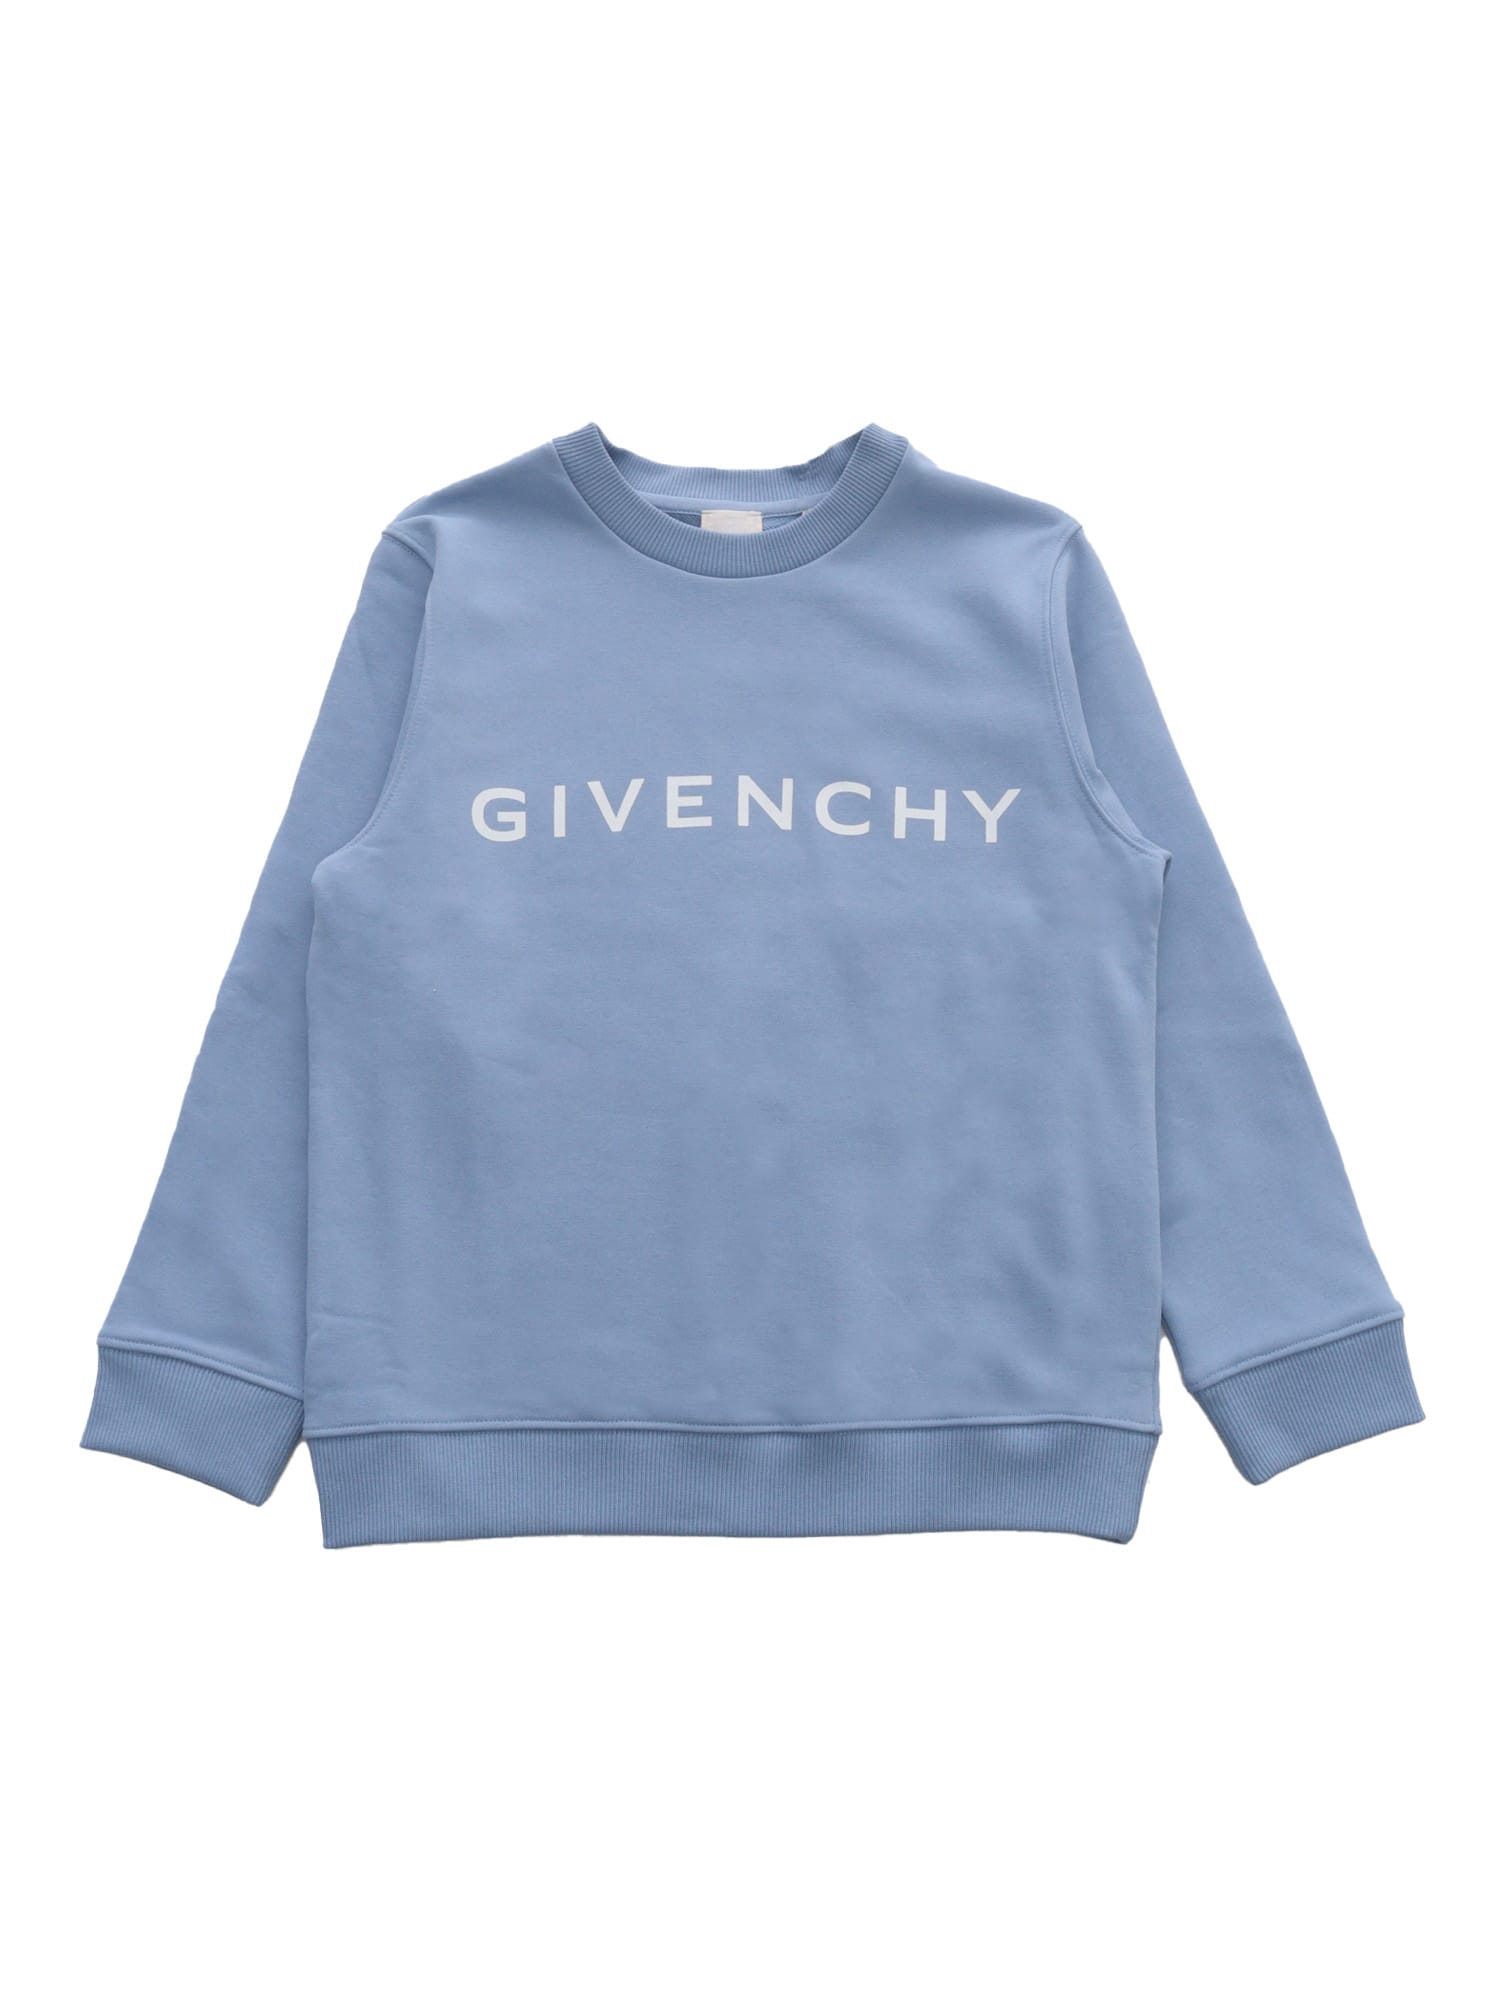 Givenchy Light Blue Sweatshirt